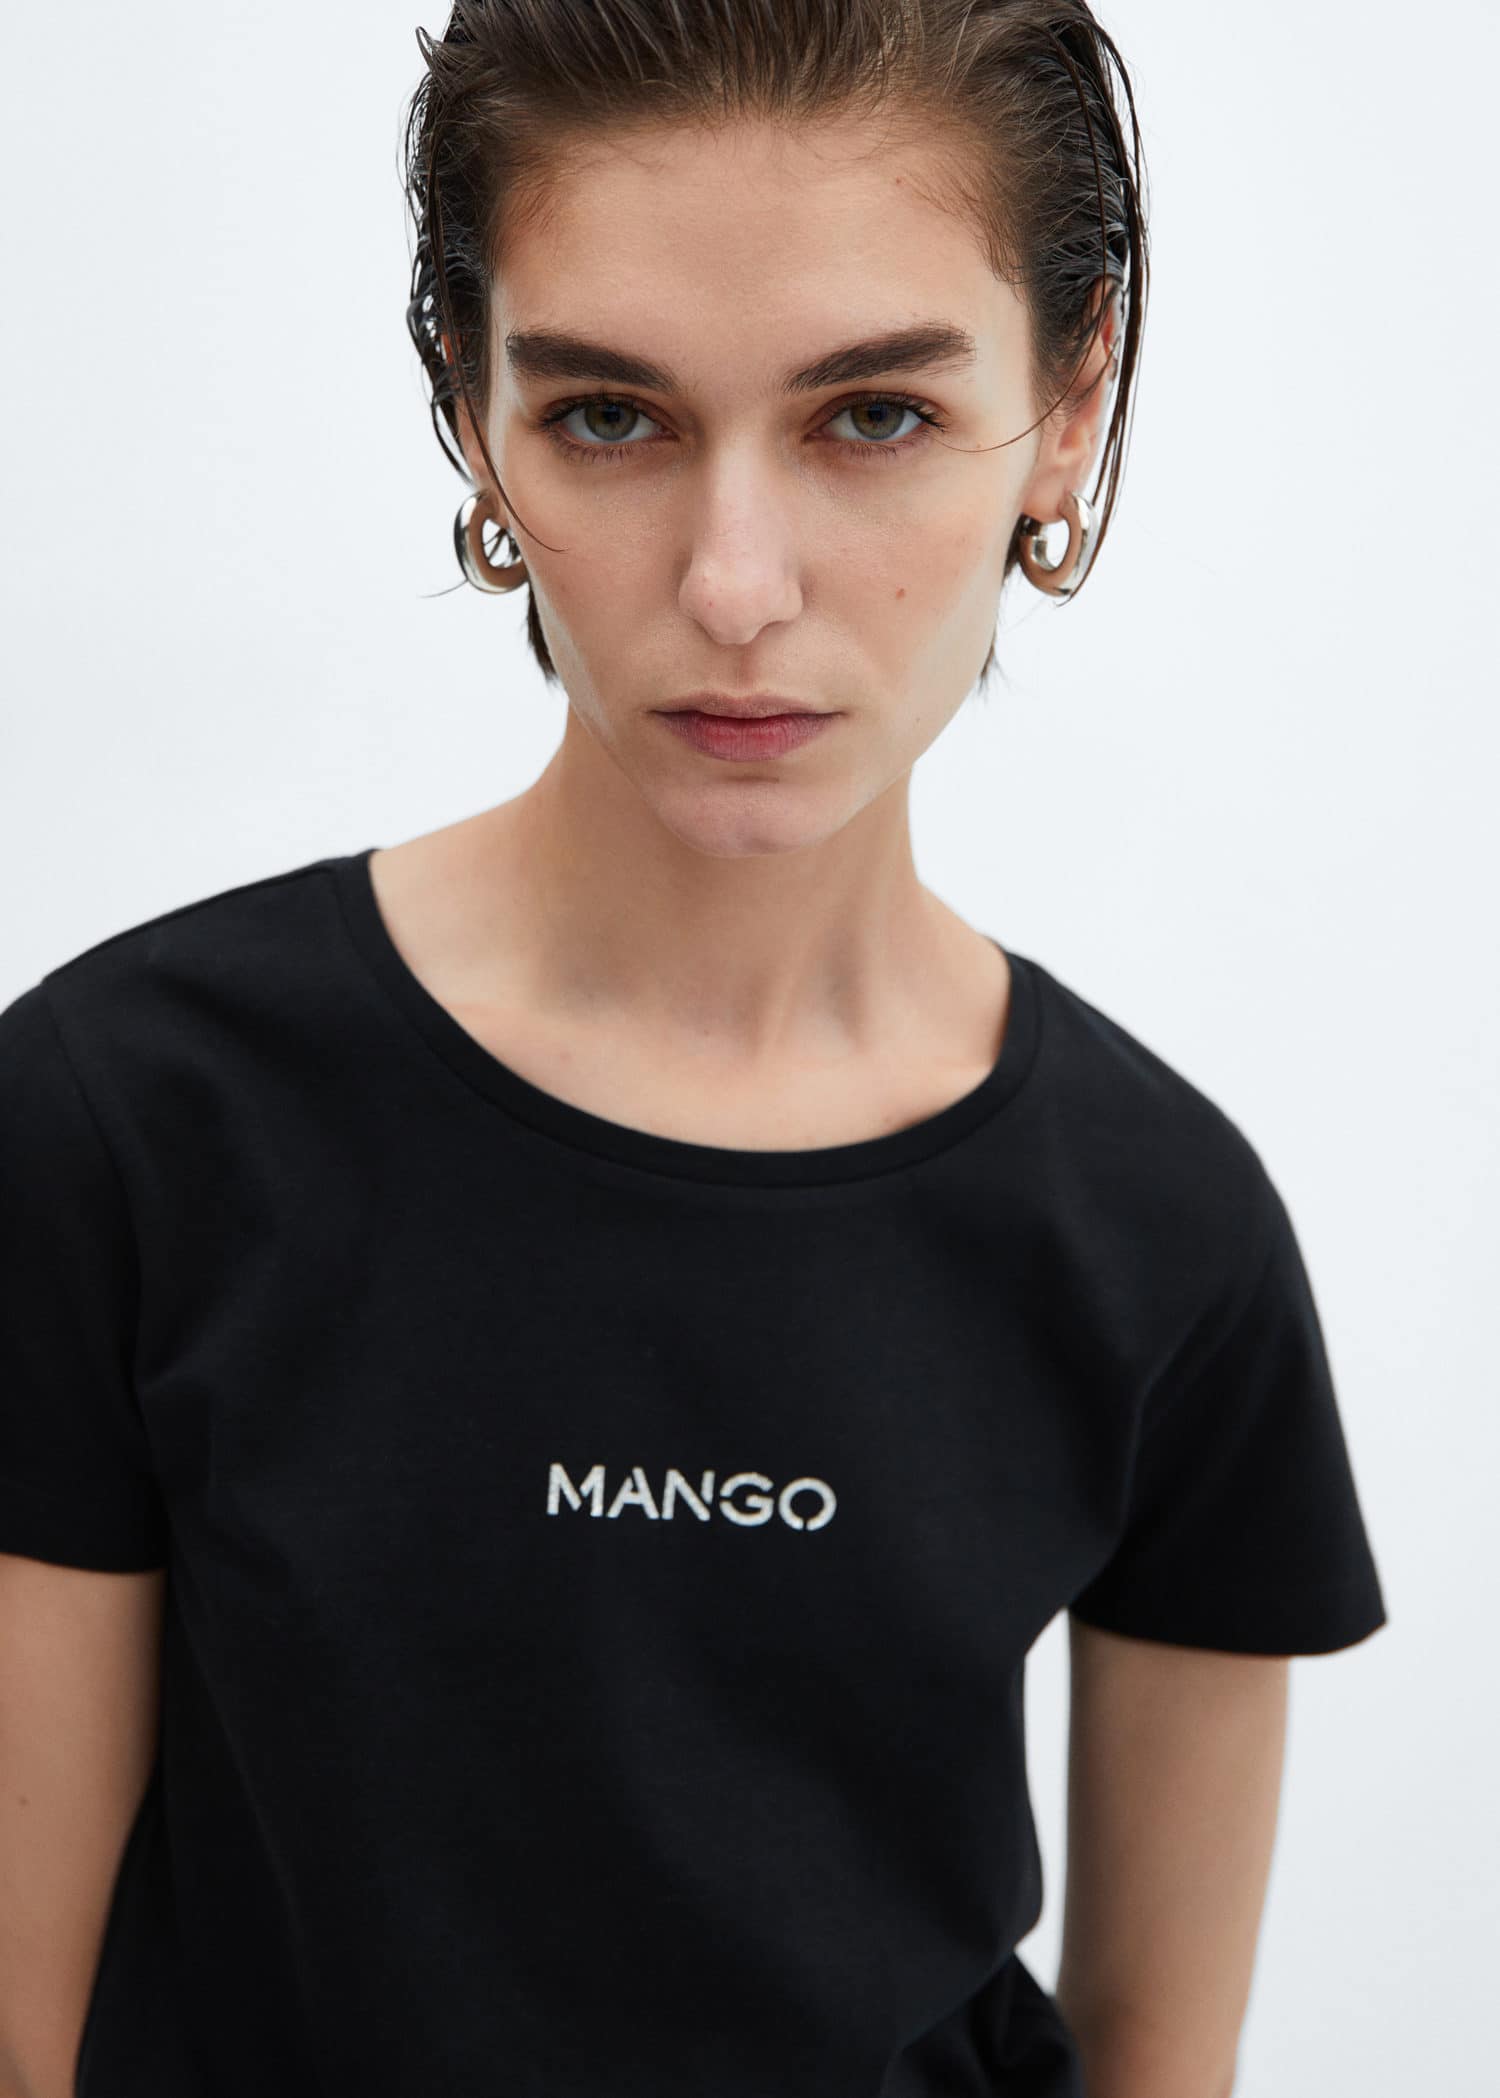 MANGO MANGOLOG-H 67010426-99 MANGO WOMEN T-SHIRT SHORT SLEEVE